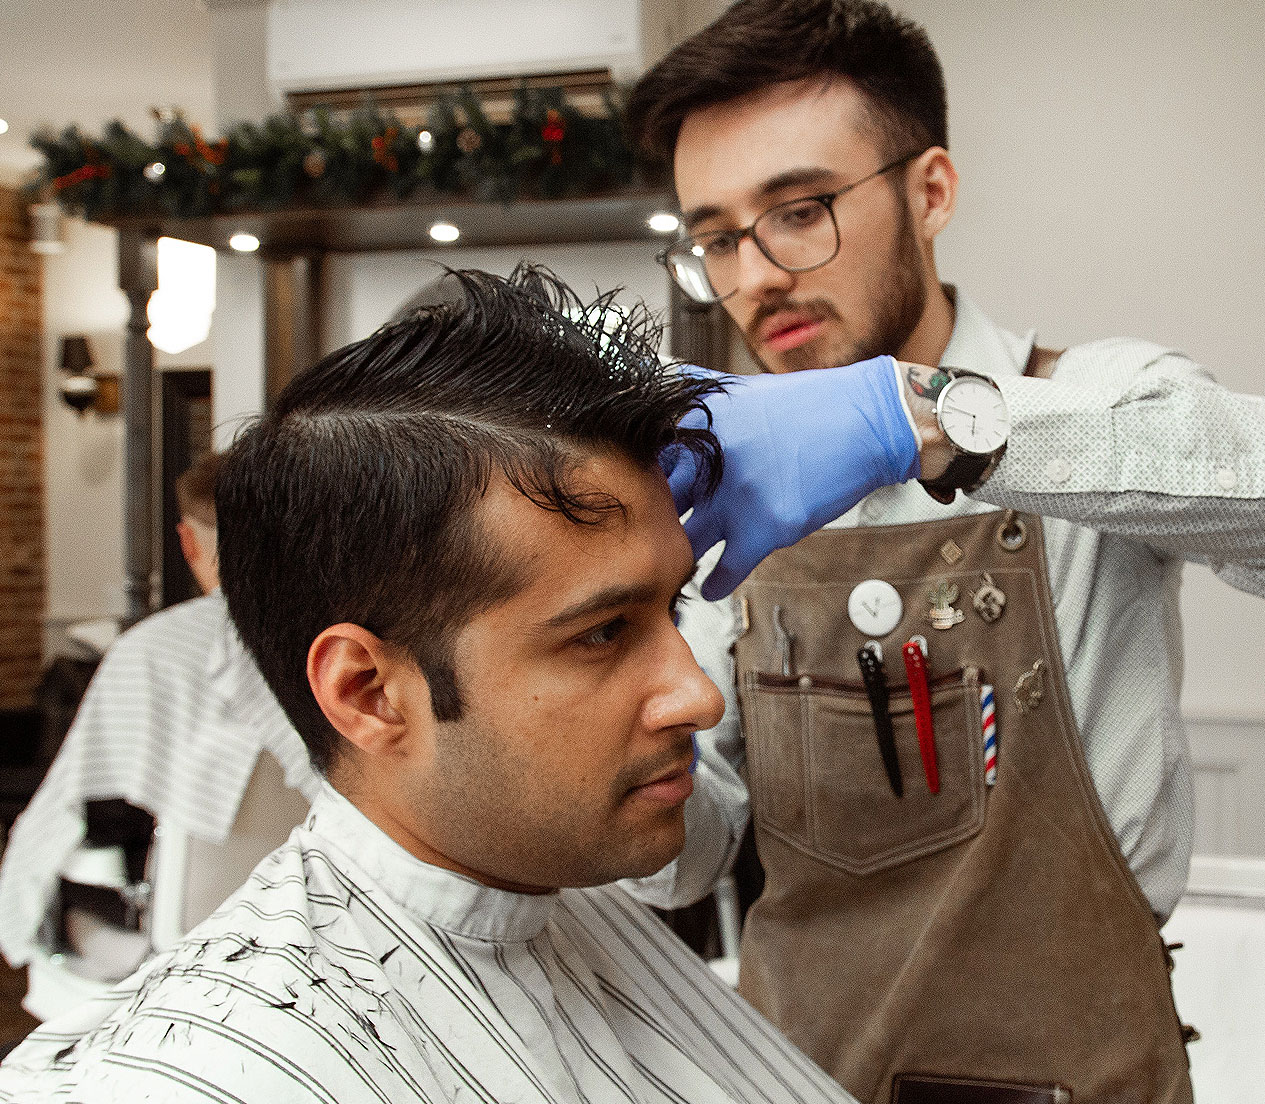 Tricoci University Student Cutting Customer's Hair